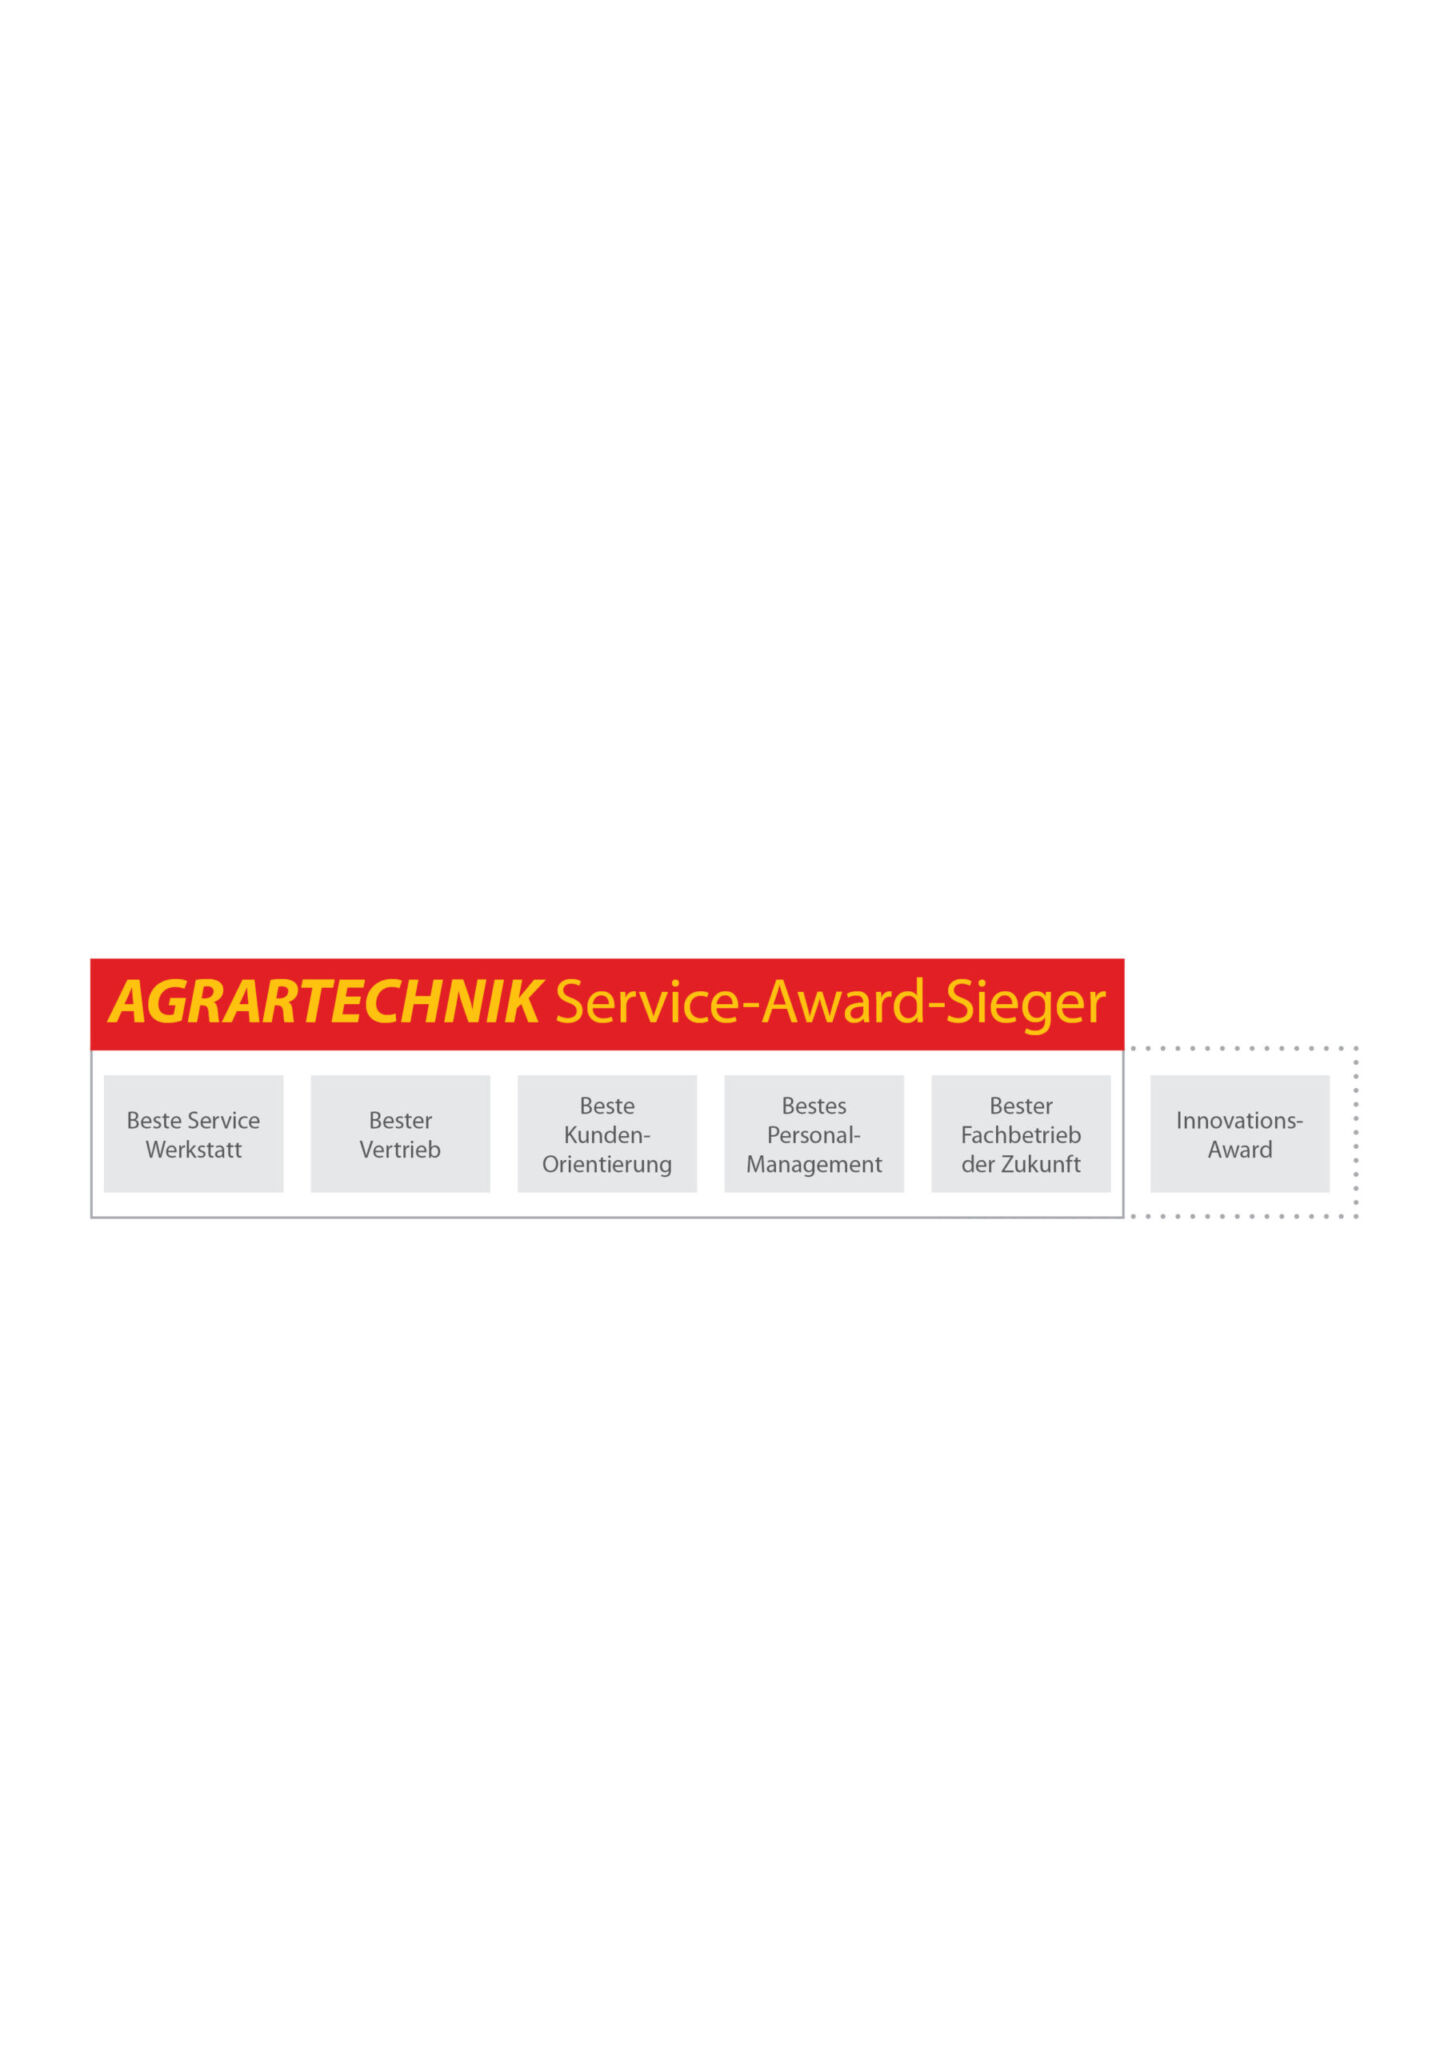 Teilnahme am AGRARTECHNIK Service Award|copyright: agrartechnik